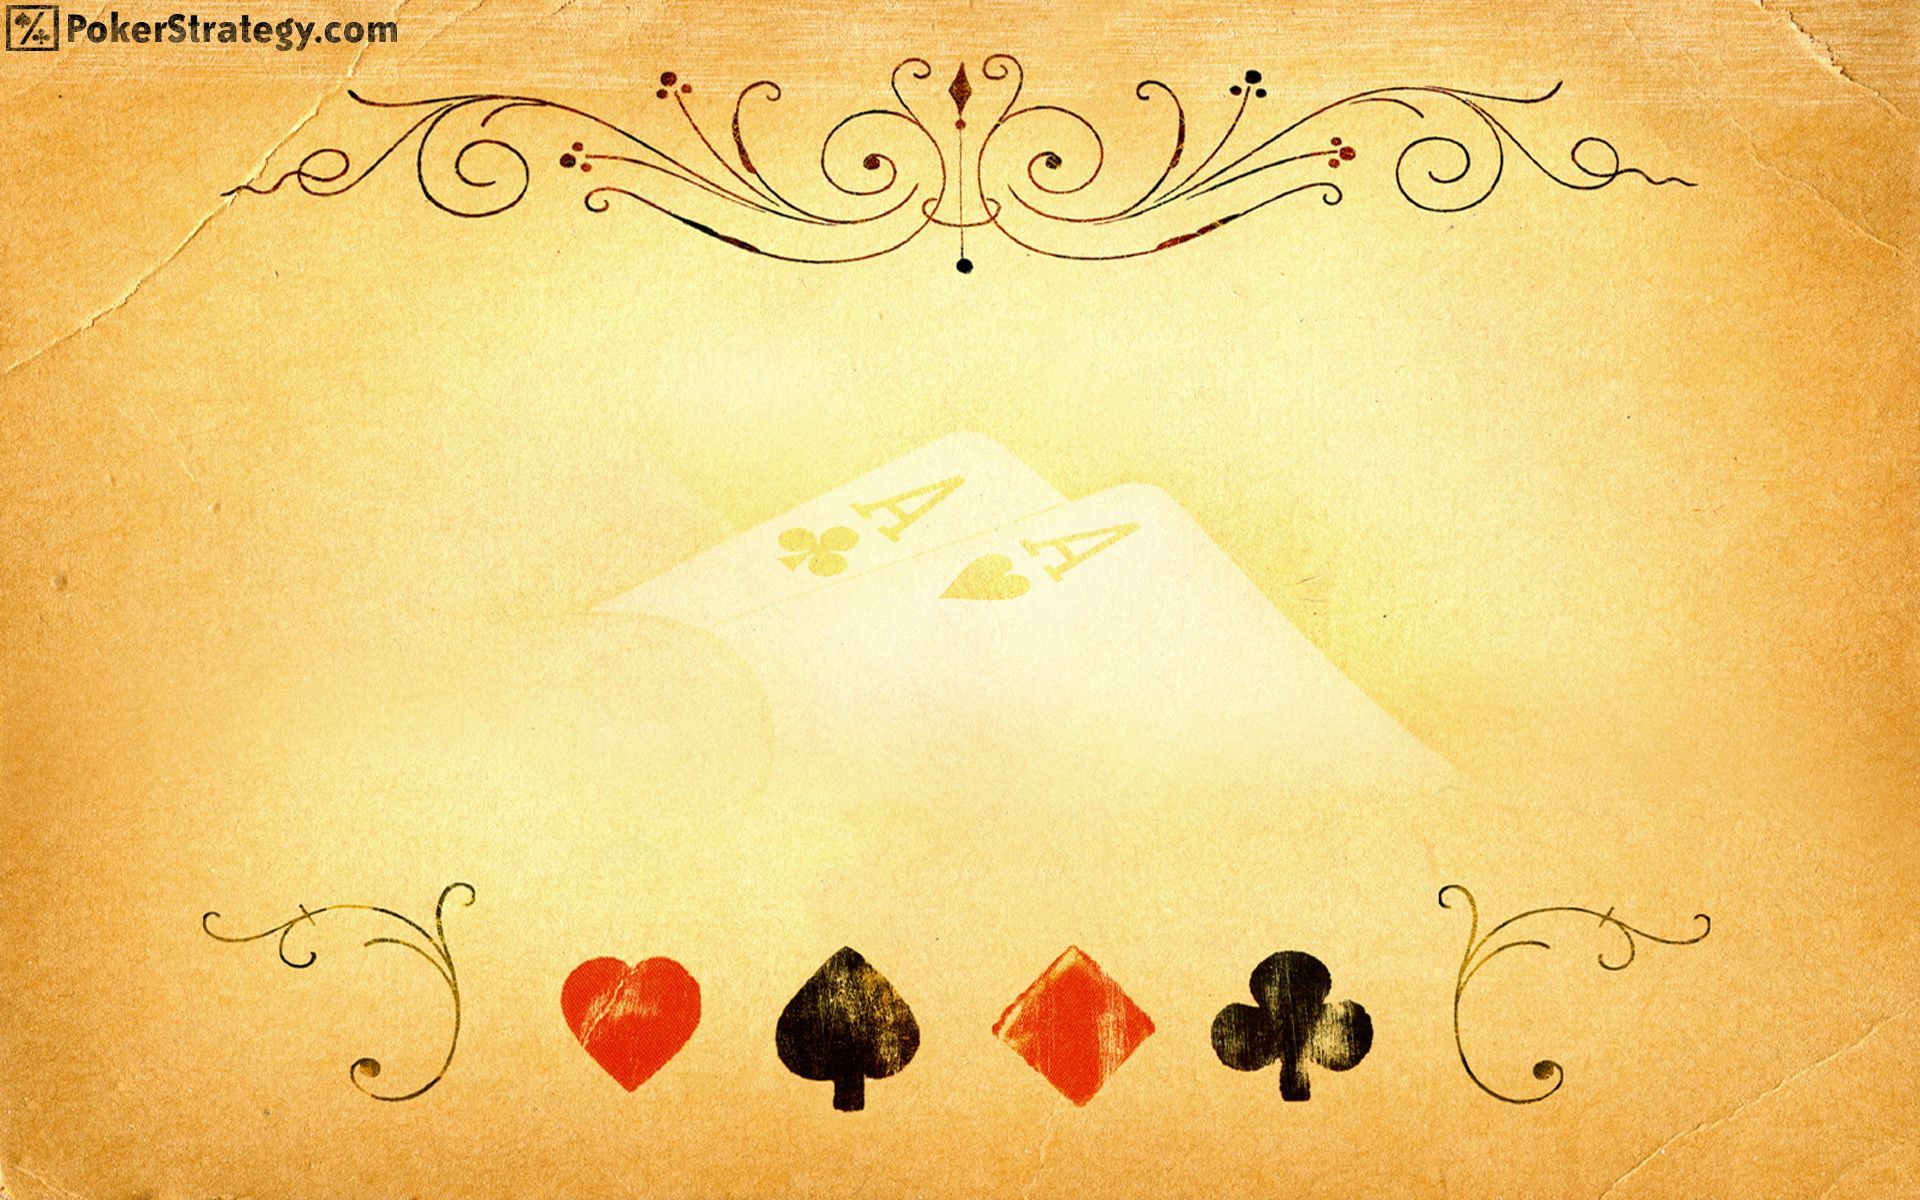 jerome soliz: Free Desktop Poker Wallpaper